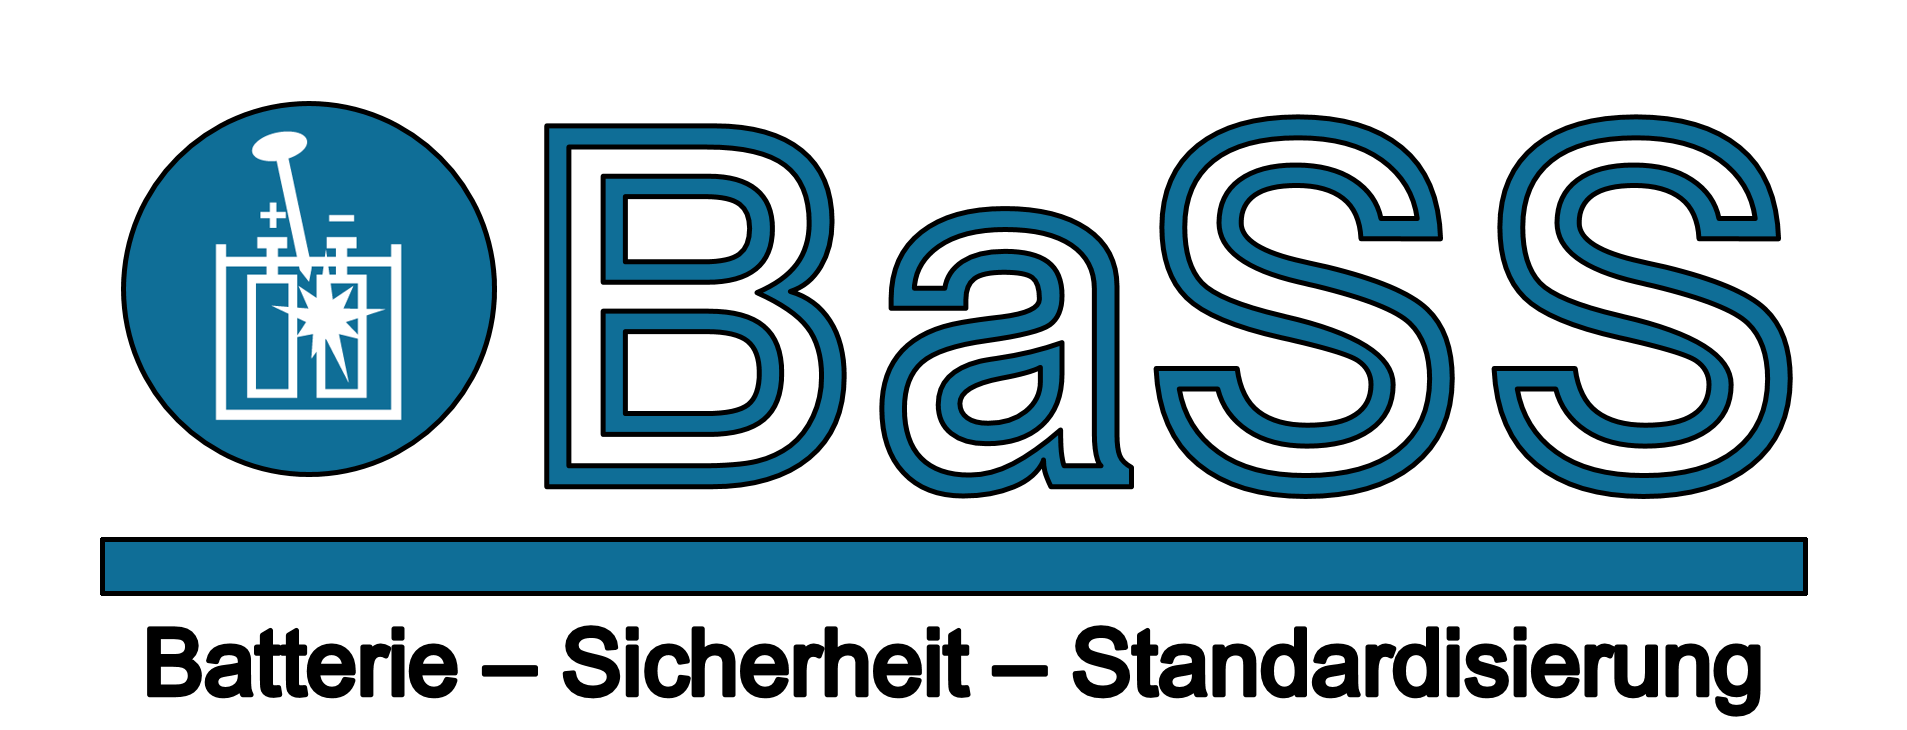 BaSS_Logo